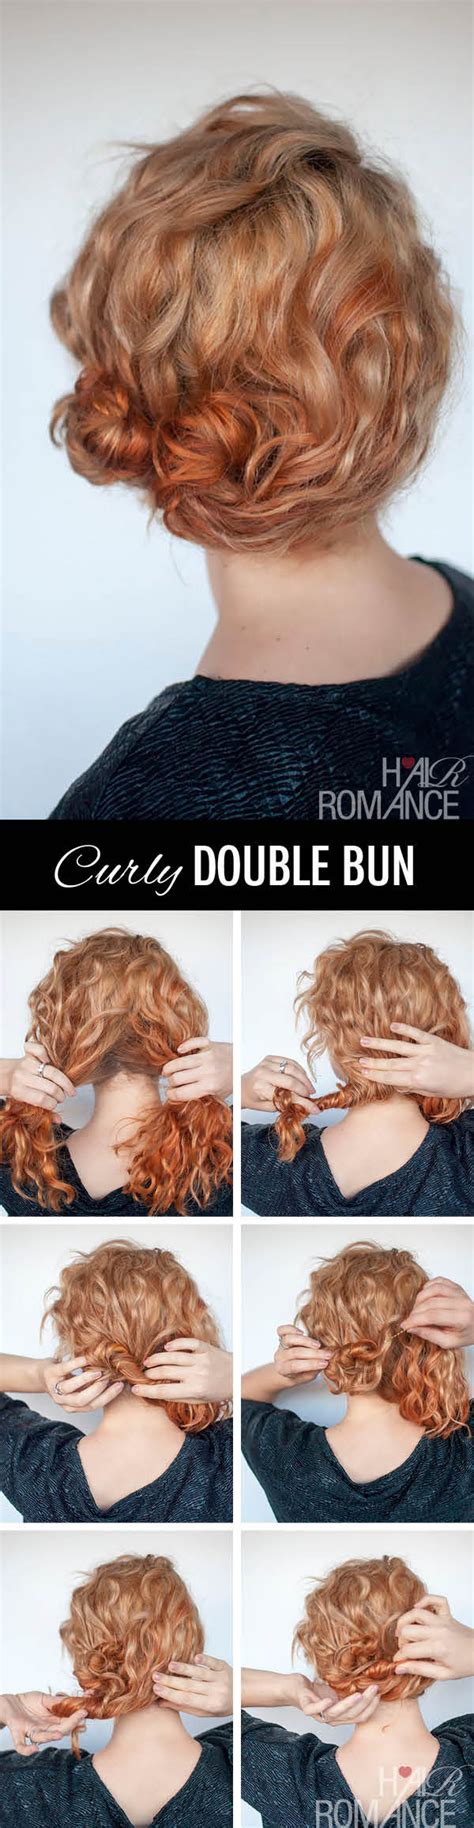 Hairstyle Tutorial For Curly Hair The Double Bun Hair Romance